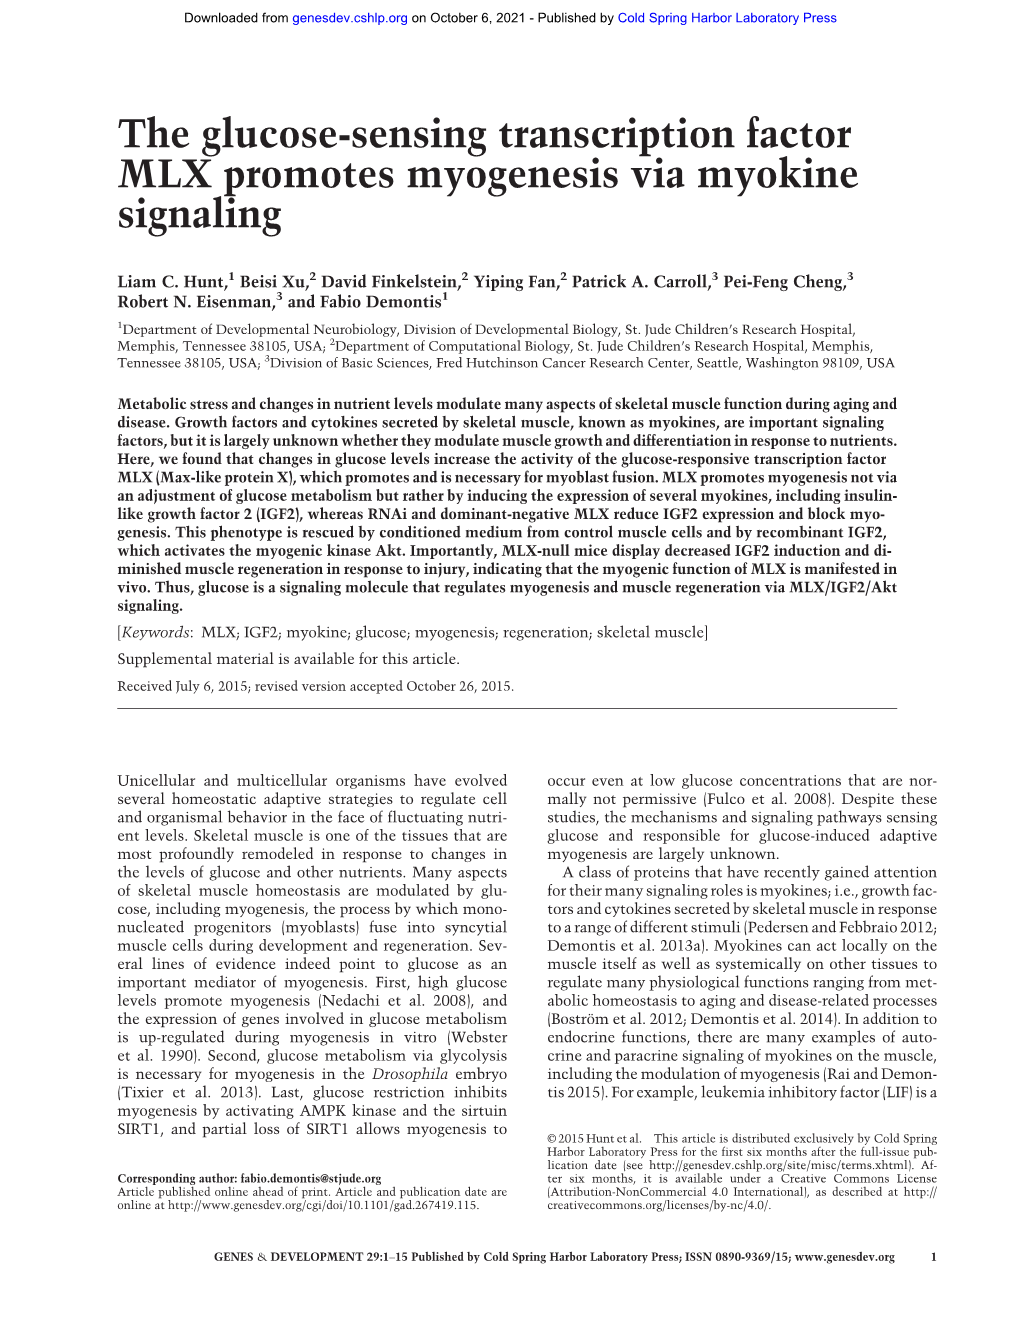 The Glucose-Sensing Transcription Factor MLX Promotes Myogenesis Via Myokine Signaling